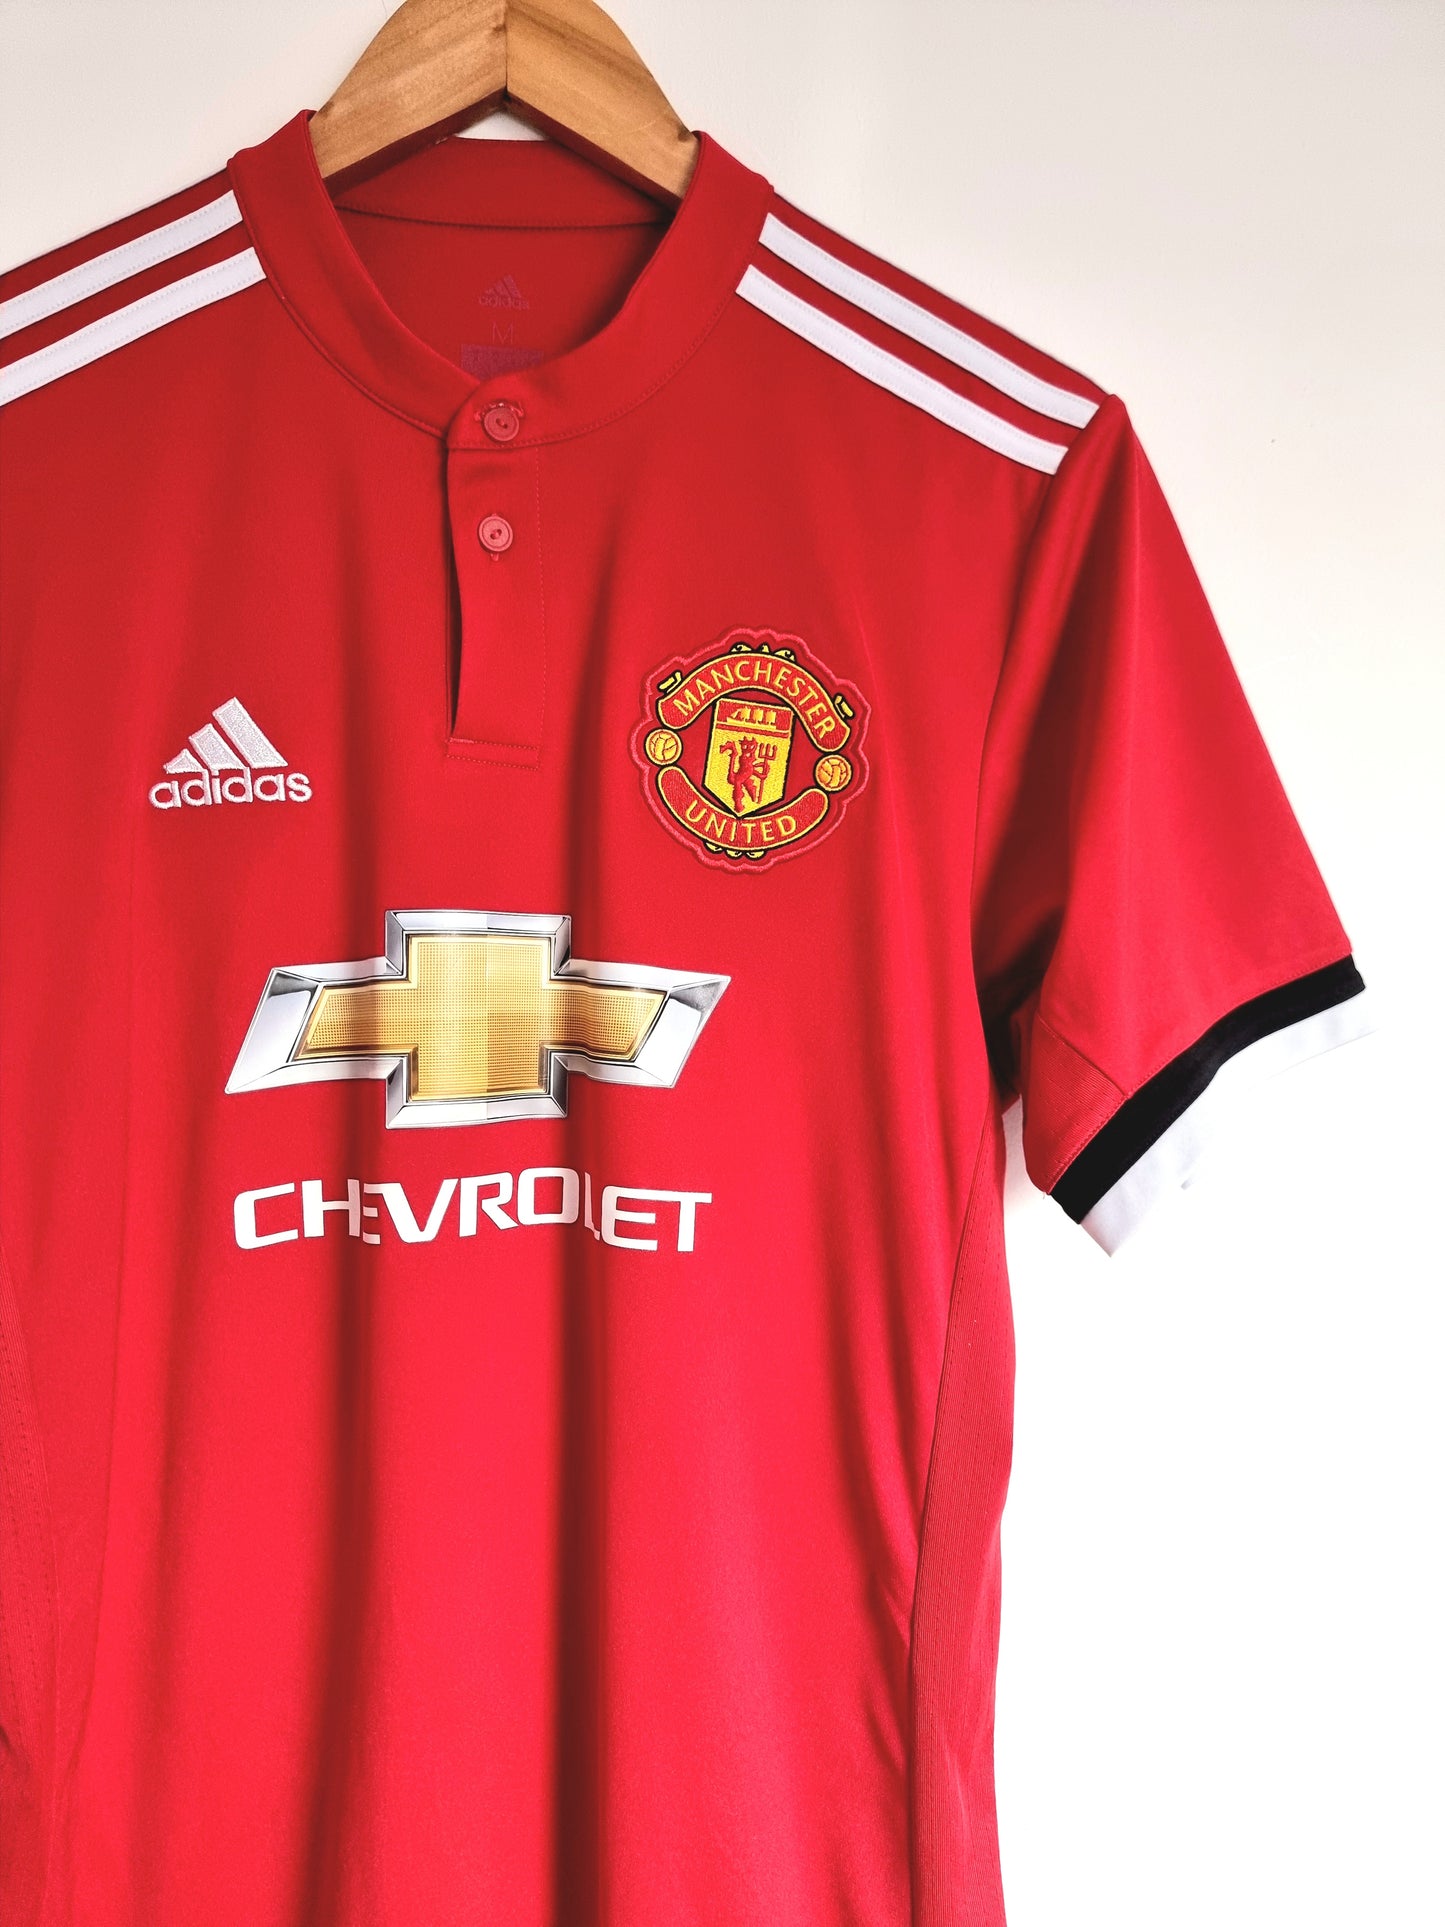 Adidas Manchester United 17/18 Home Shirt Medium